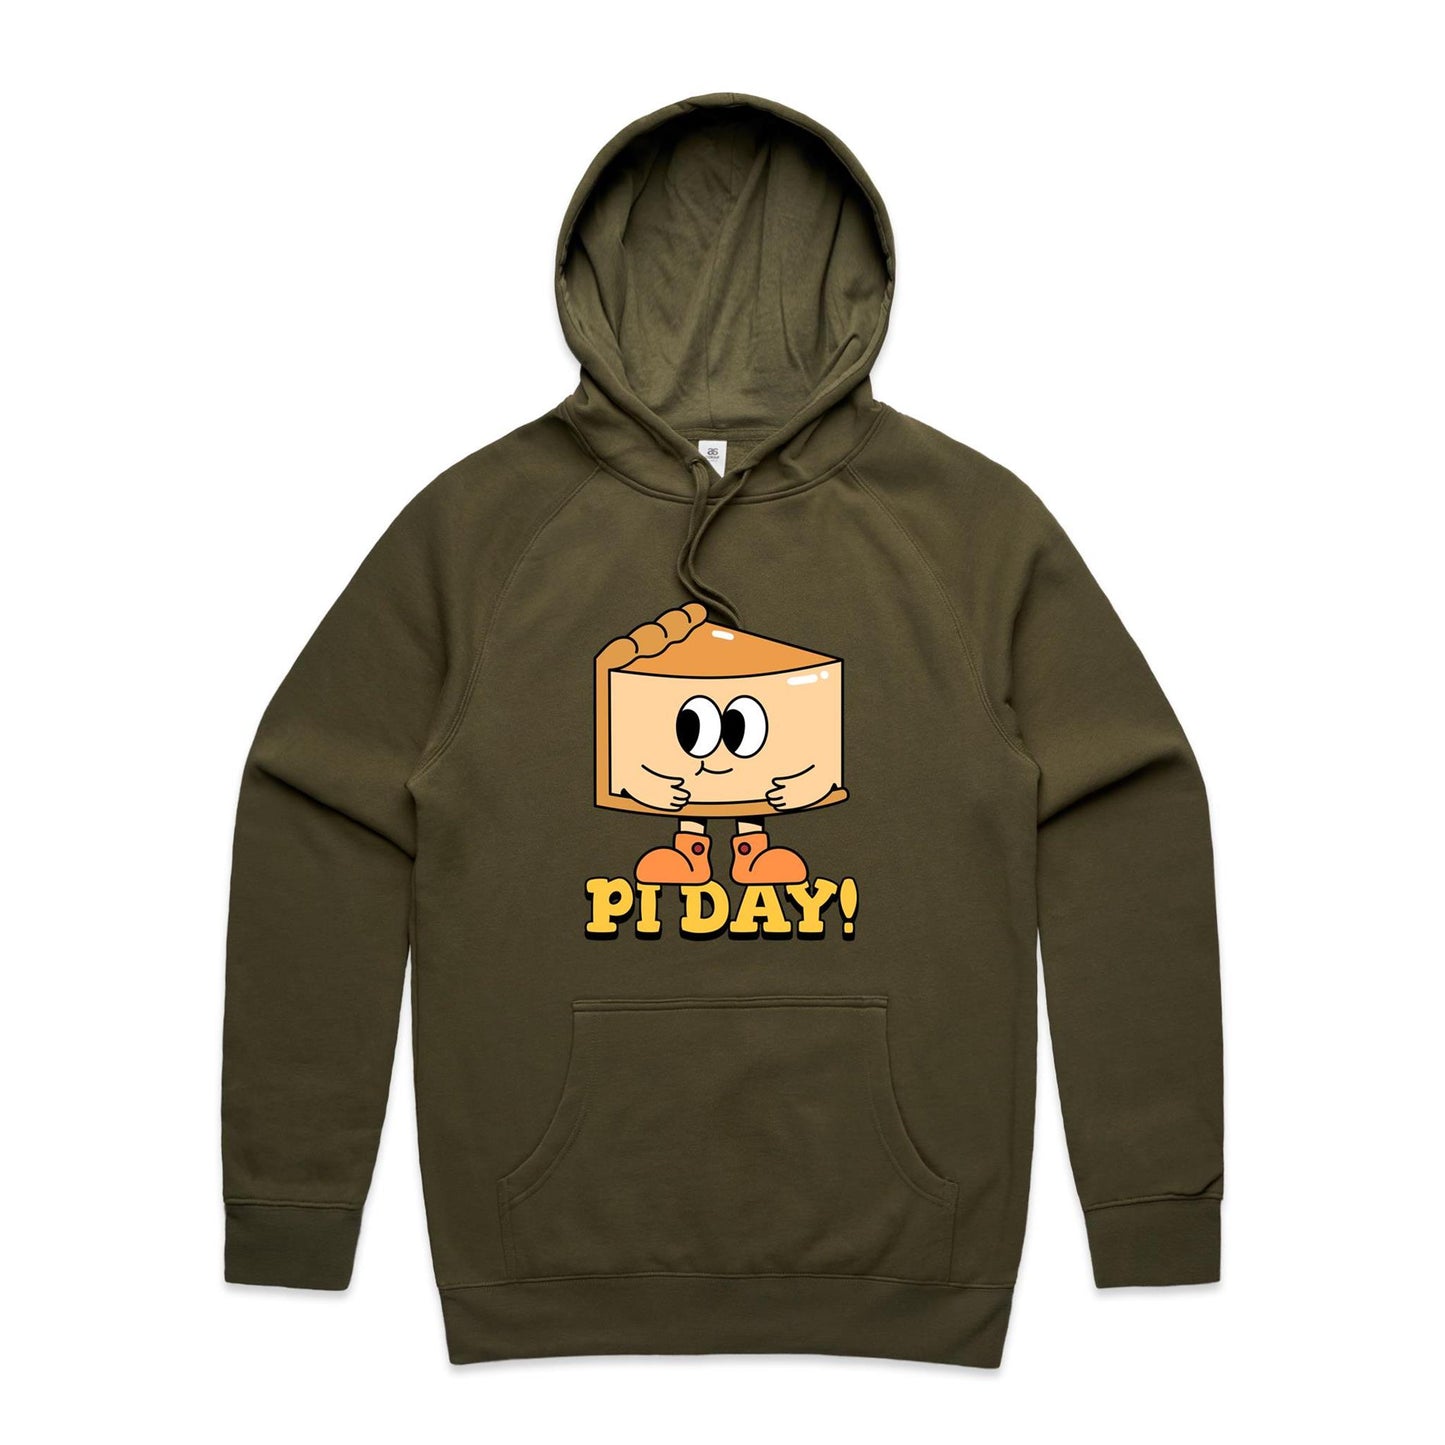 Pi Day - Supply Hood Army Mens Supply Hoodie